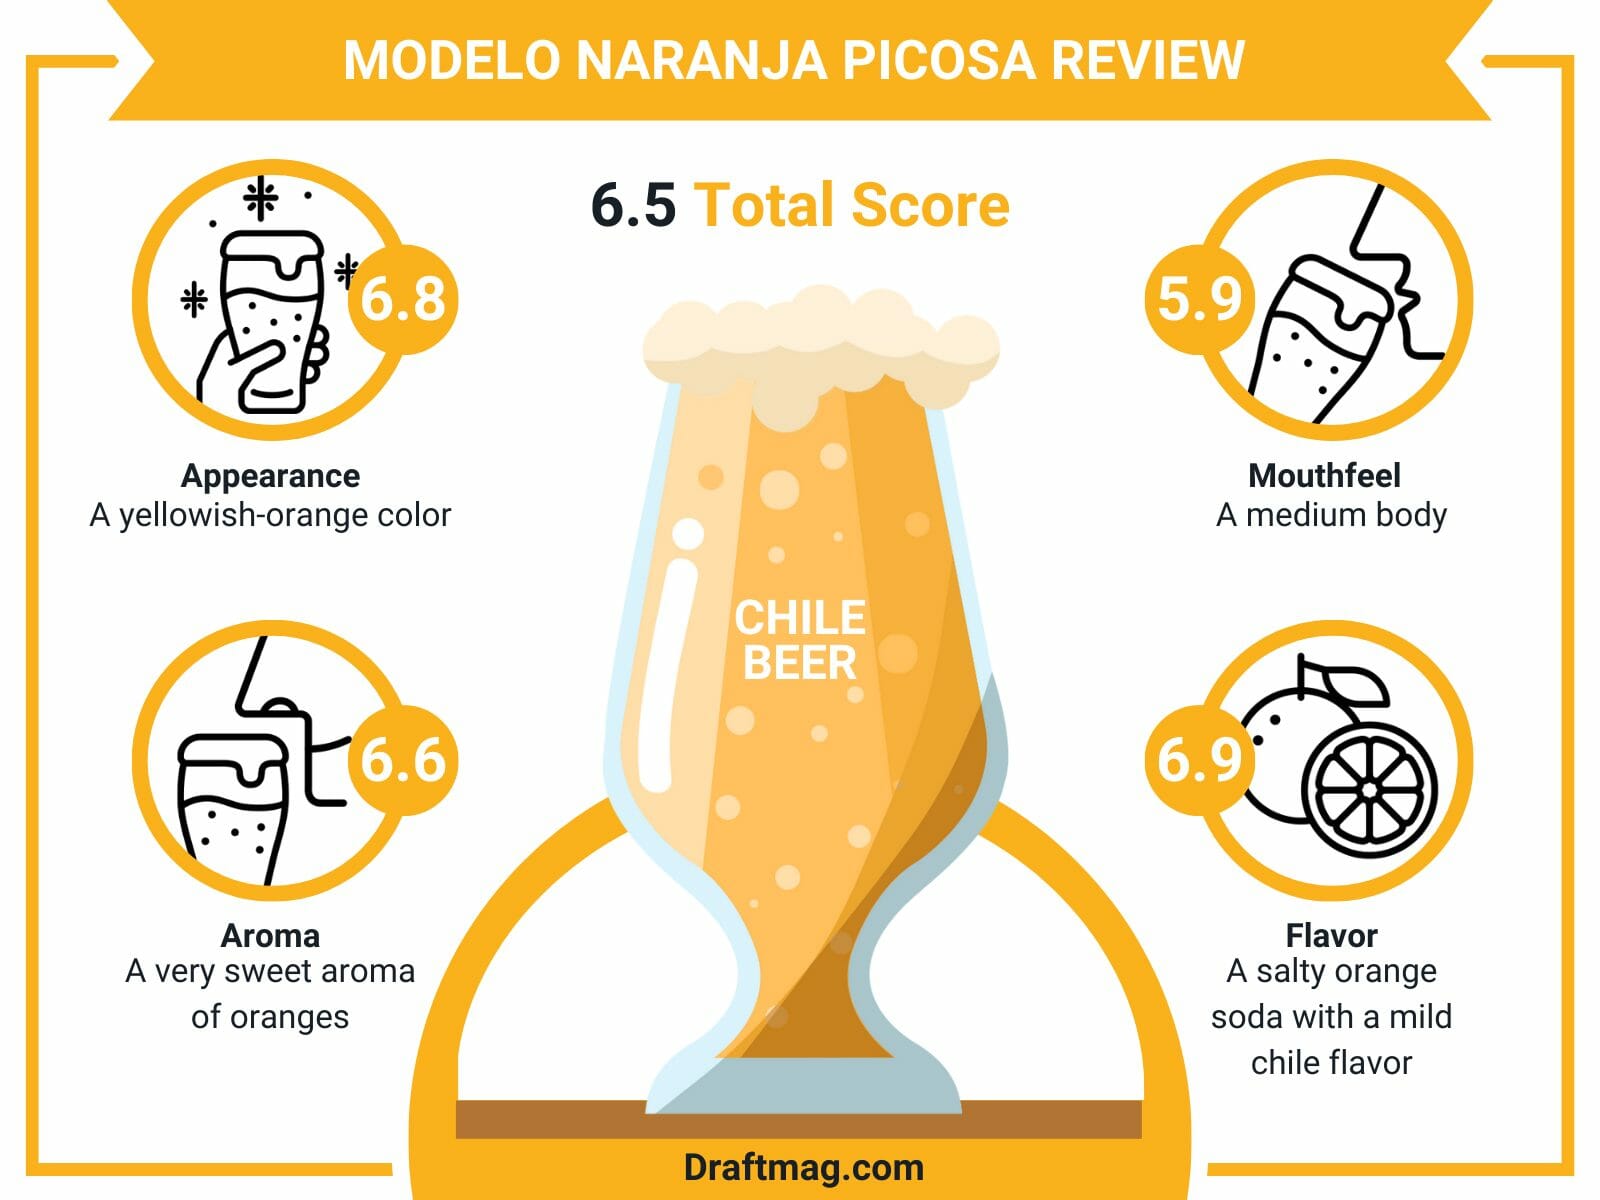 Modelo naranja picosa review infographic